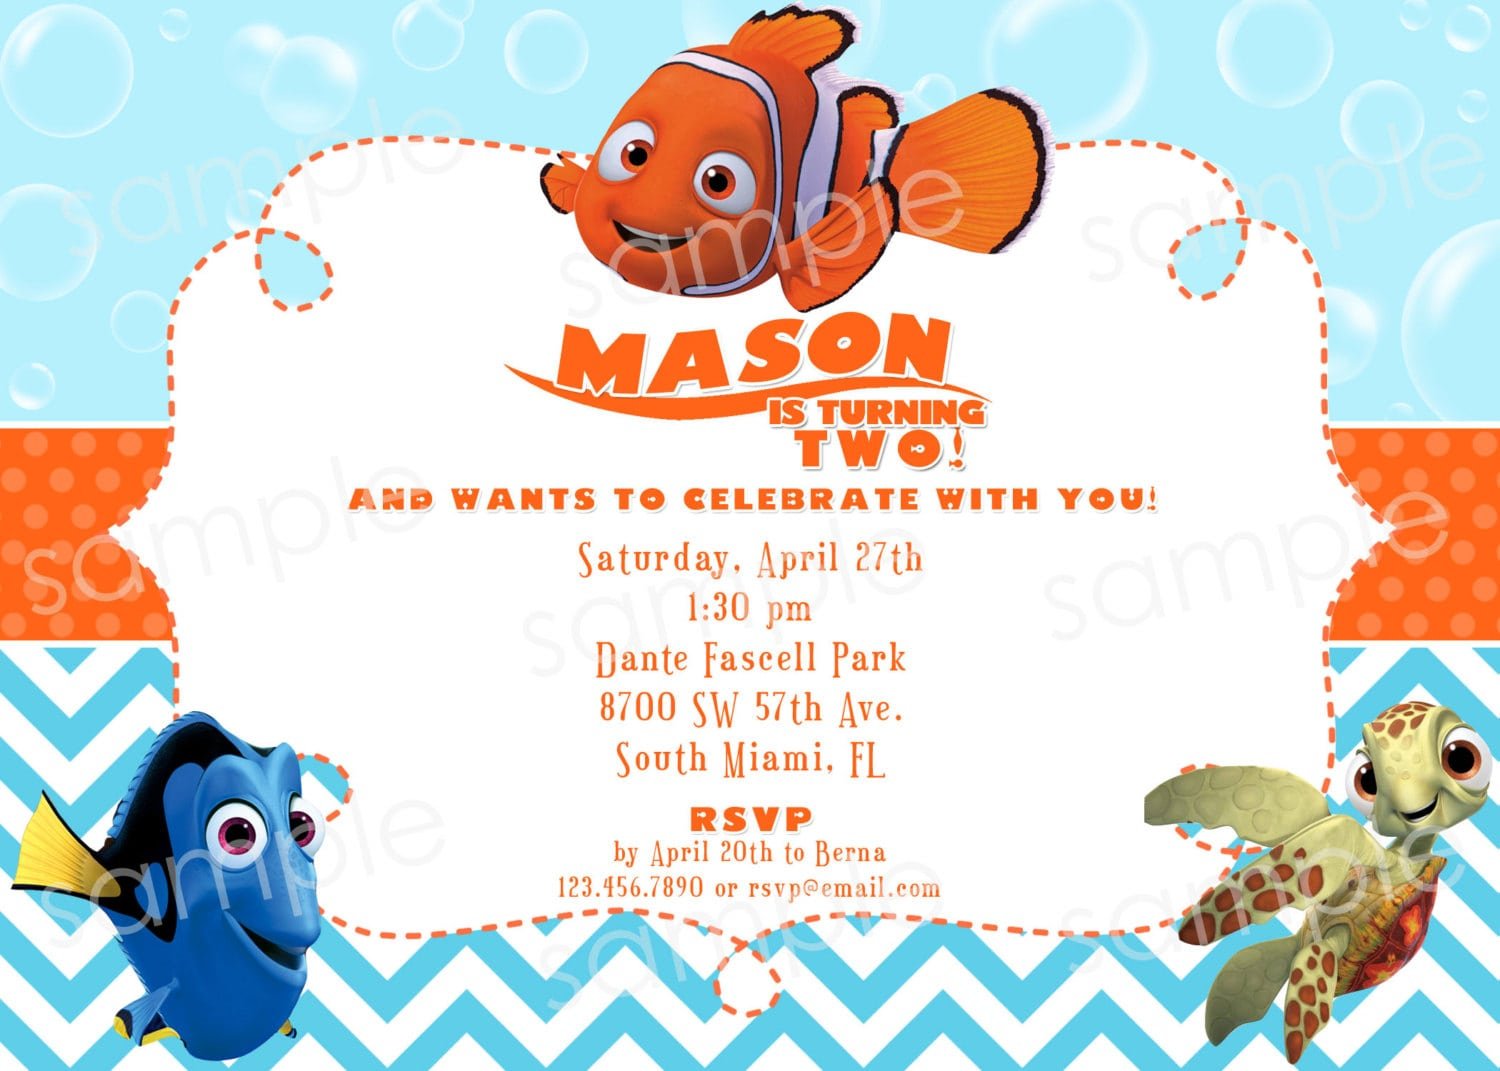 Finding Nemo Birthday Invitations